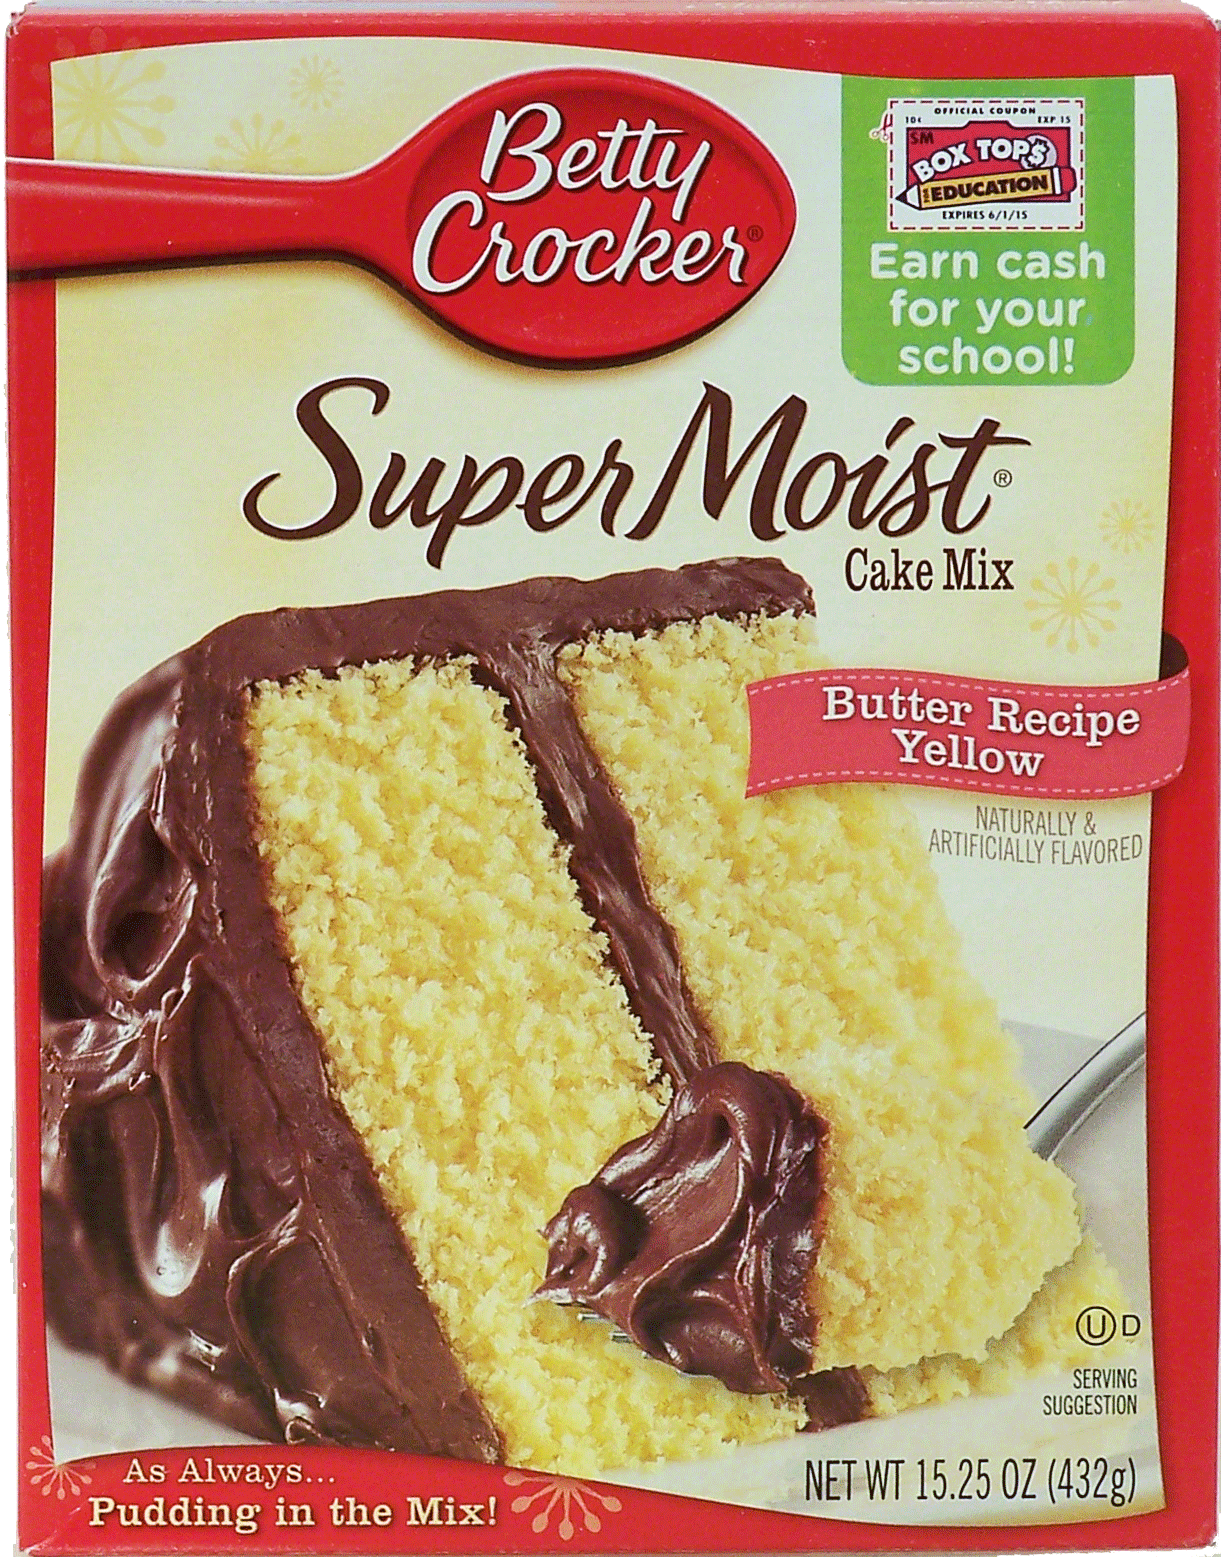 Betty Crocker Super Moist butter recipe yellow cake mix Full-Size Picture